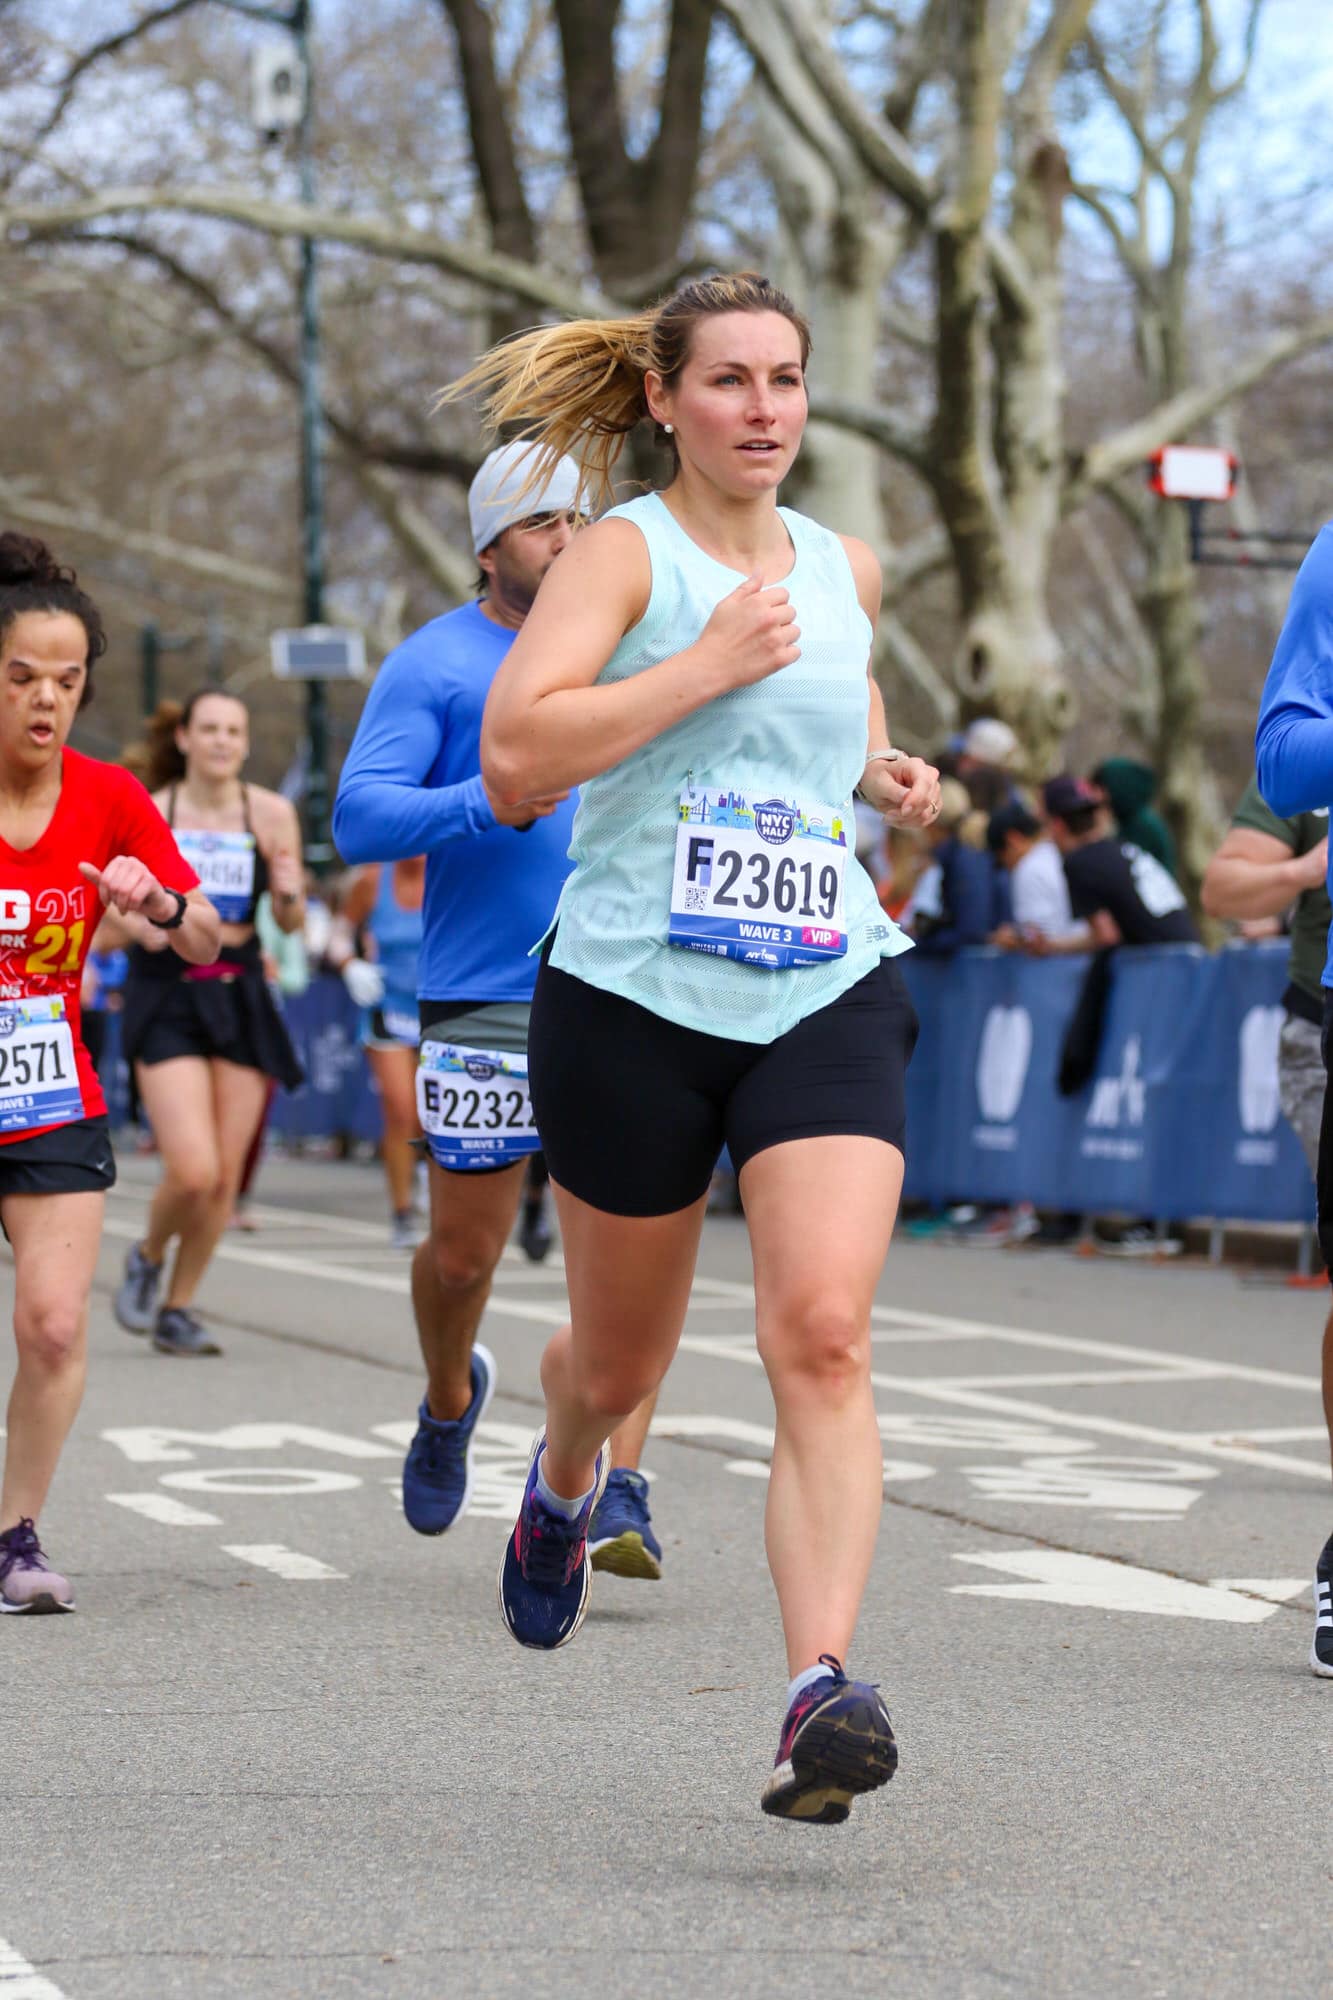 The runner beans marathon recap